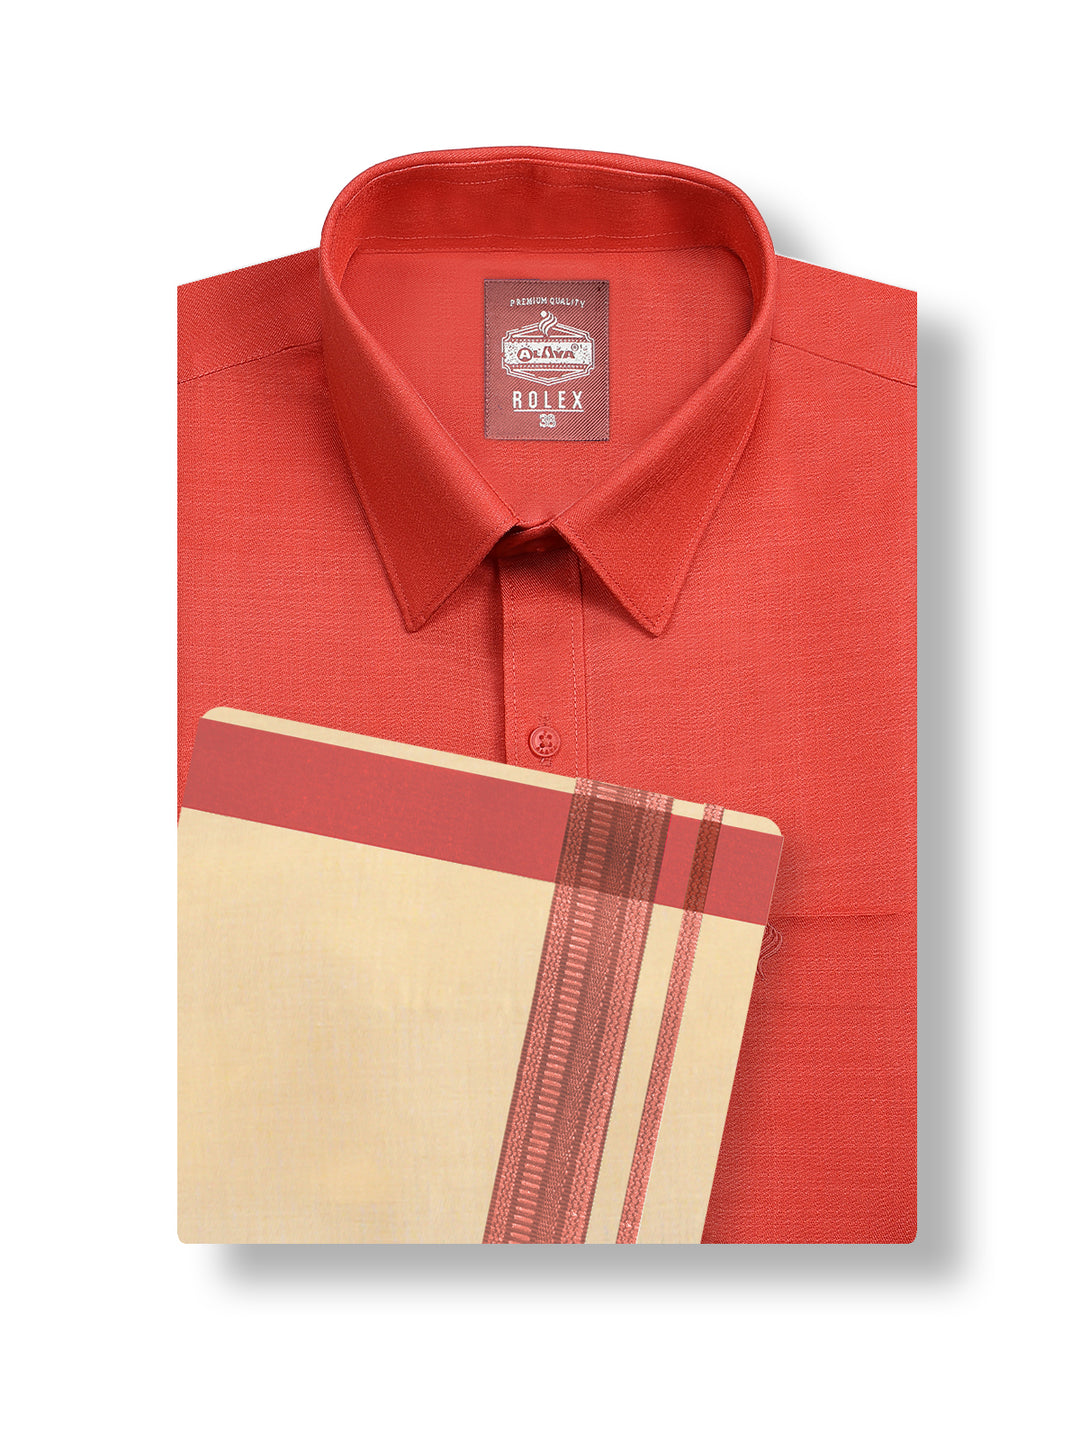 Buy Tissue Jari Dhoti & Shirt Sets Online, Best Tissue Jari Dhoti & Shirt  Sets for Men at Best Price